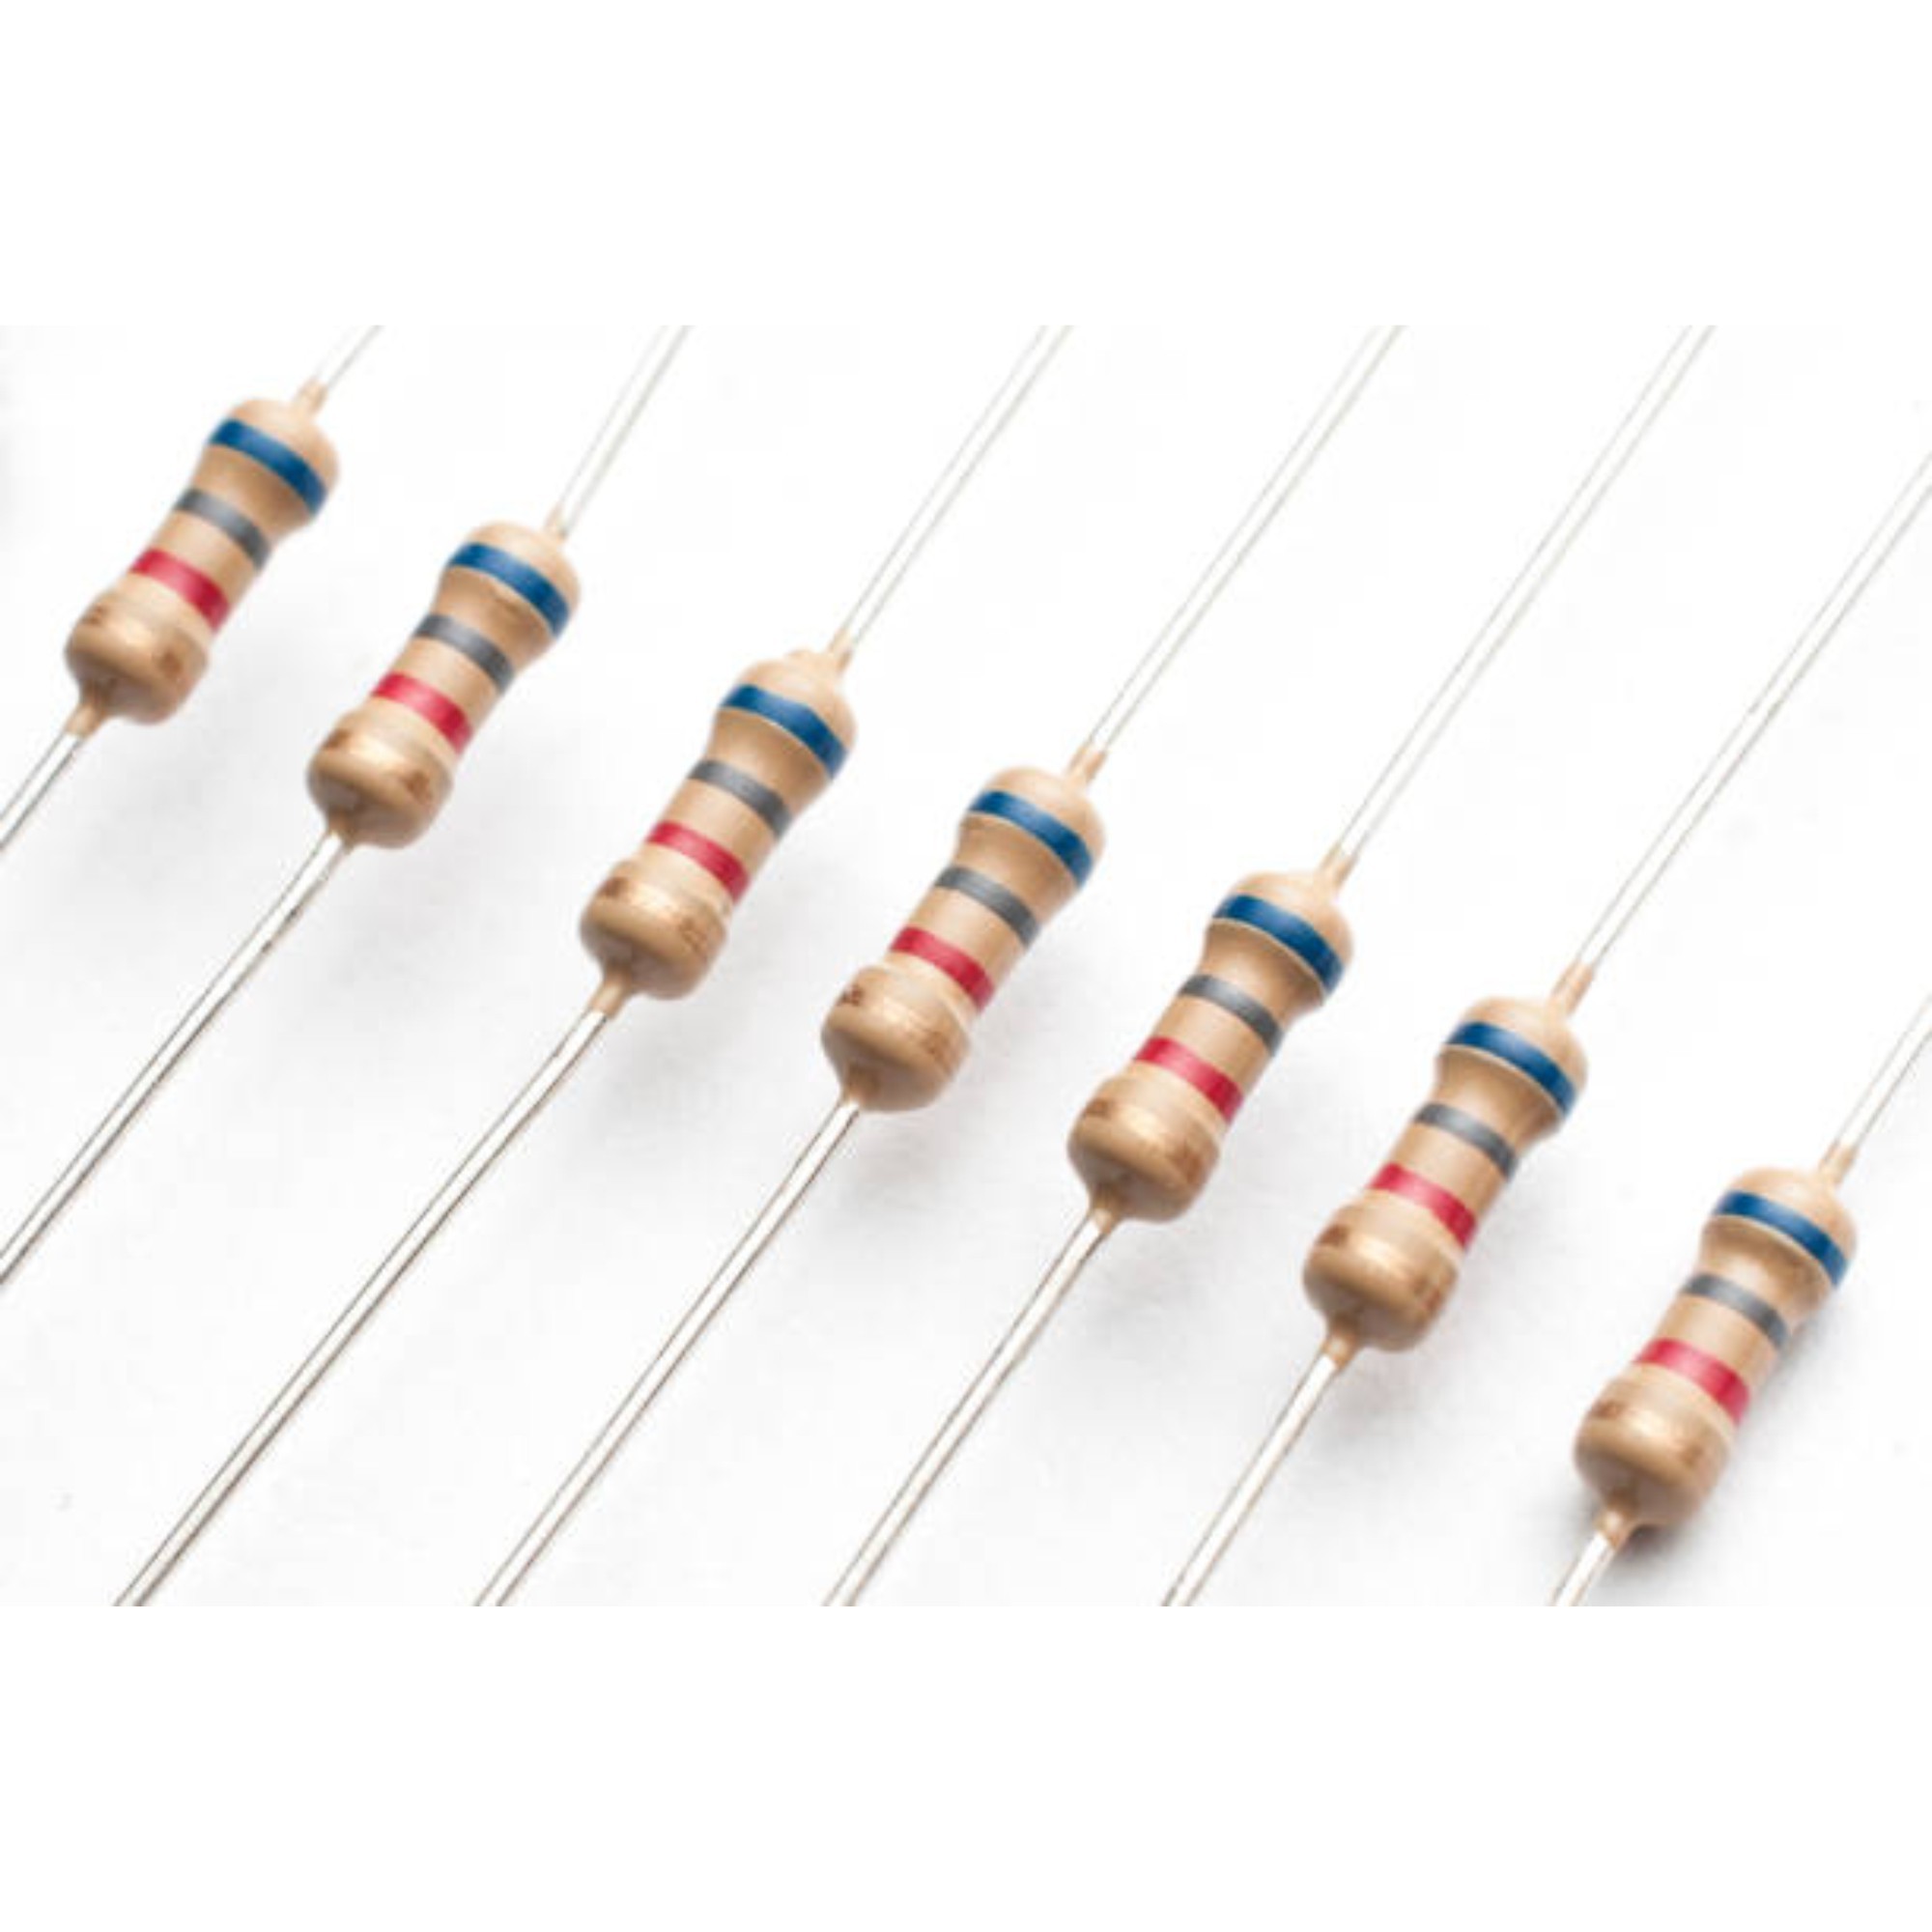 Resistor 10k CR25 1/4W 5% C/ 10 Unidades